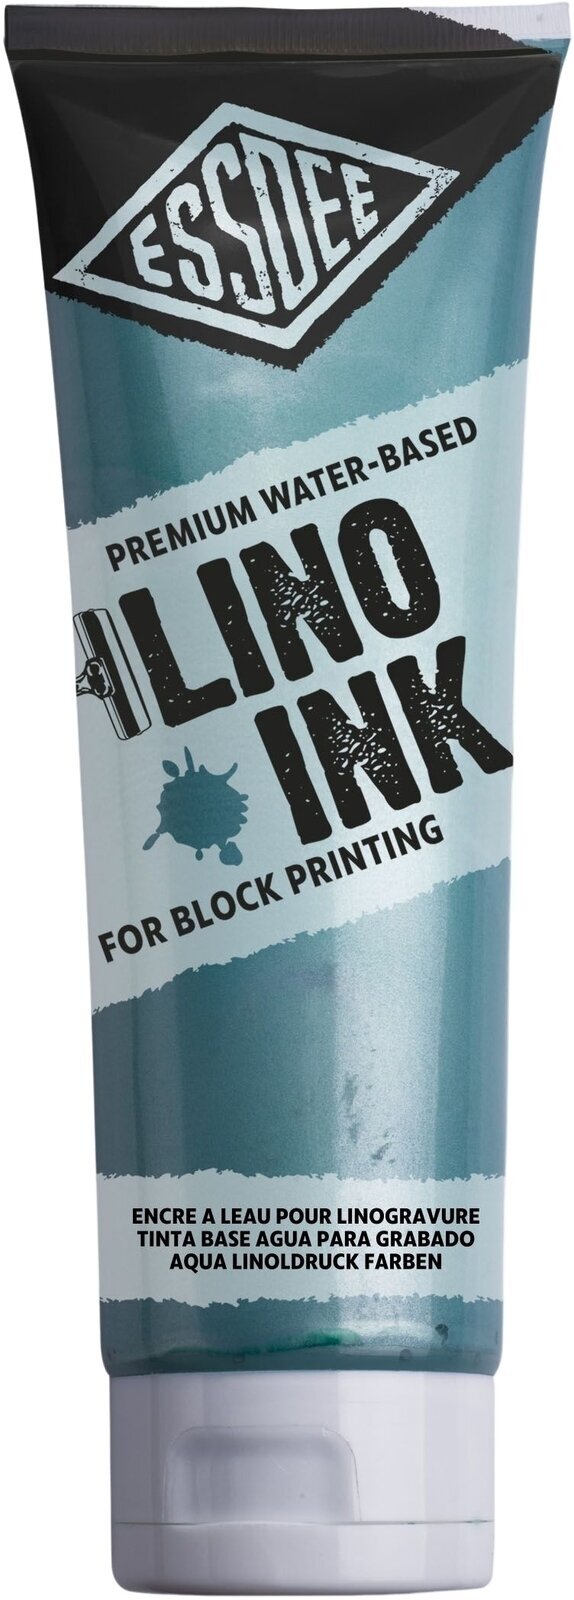 Farbe für Linolschnitt Essdee Block Printing Ink Farbe für Linolschnitt Pearlescent Green 300 ml